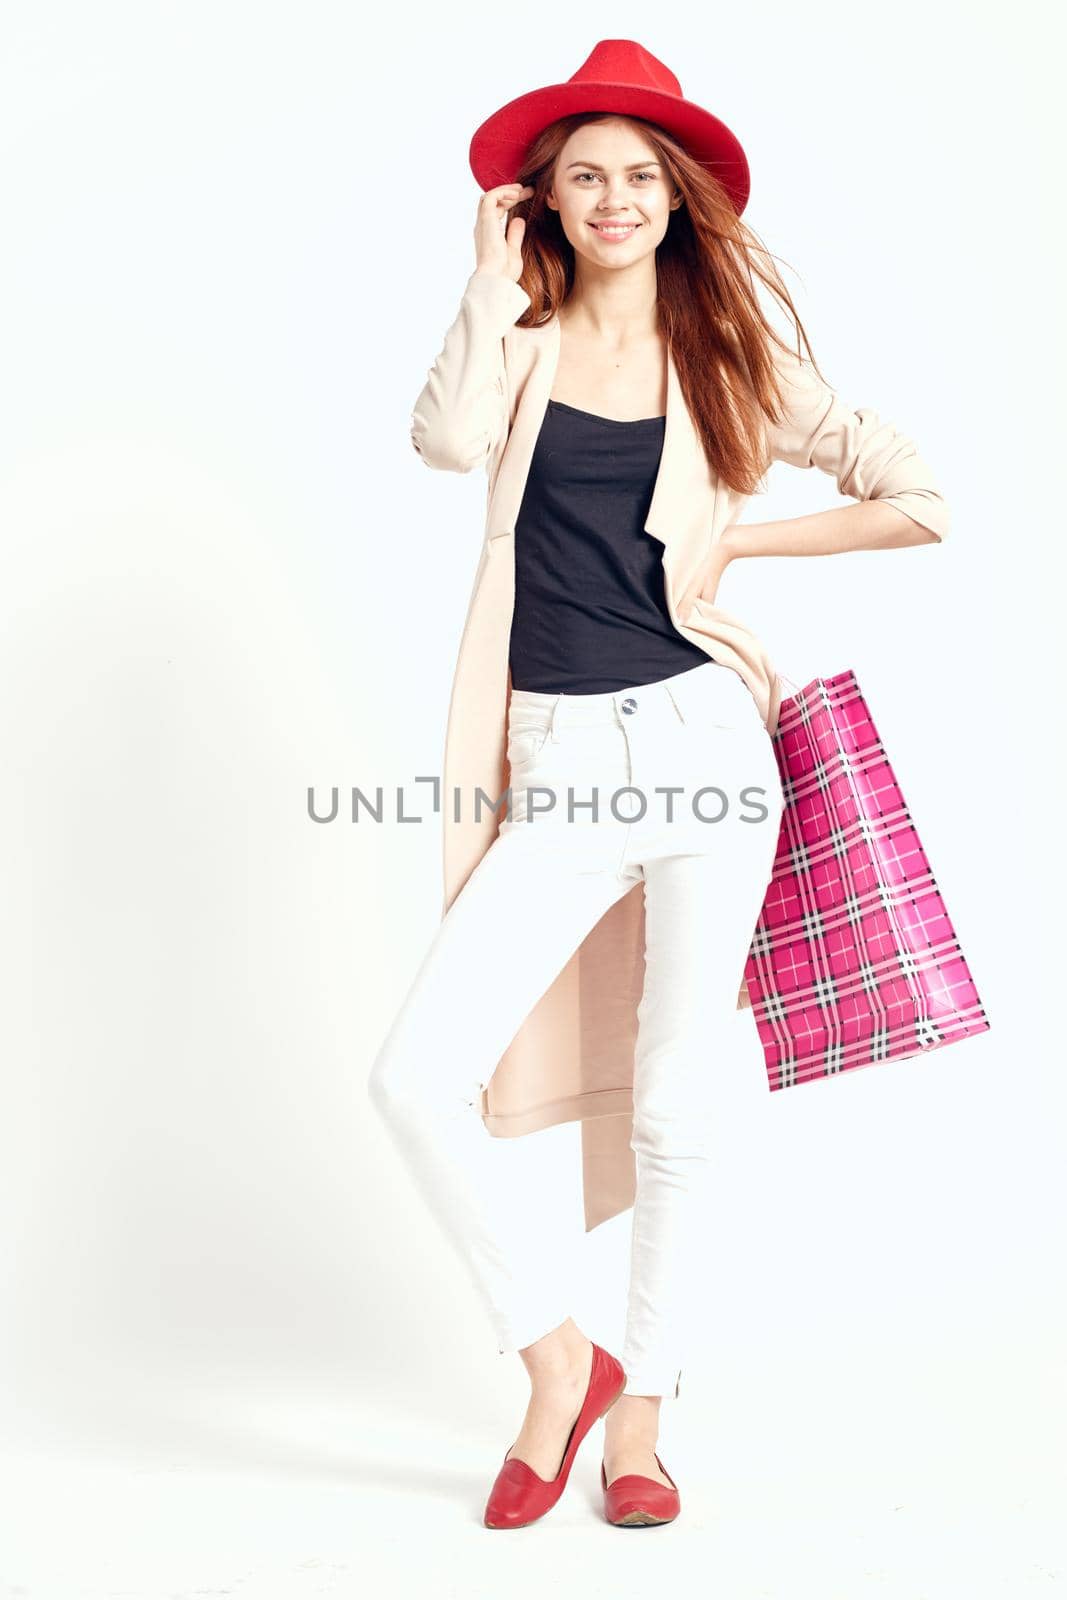 pretty woman wearing a red hat posing shopping fun studio model. High quality photo